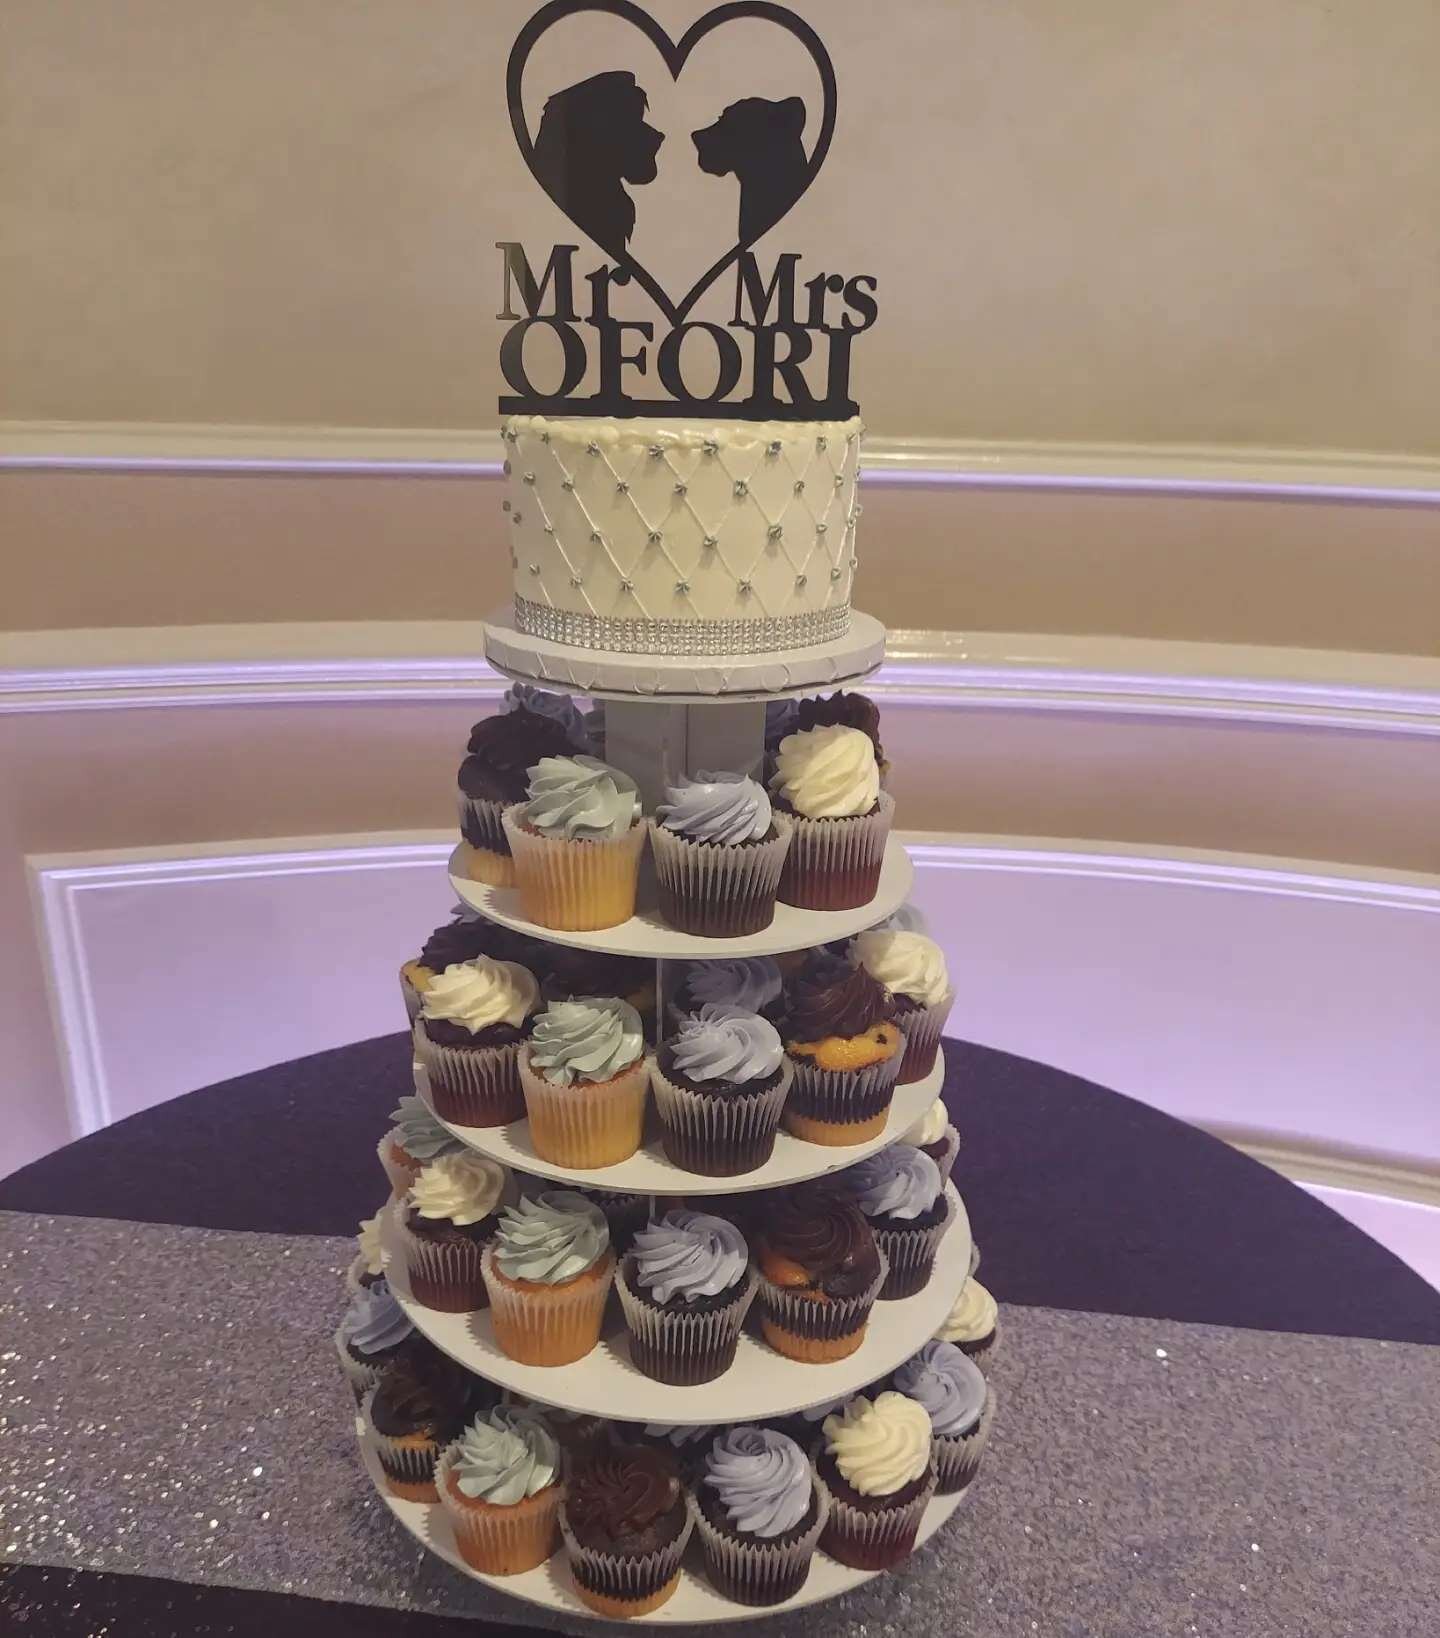 Cupcake tower @anthonysoceanview and a rustic teir cake @saybrookpointresort #weddingcakes #ctshorelinewedding #italiandessert #donuts